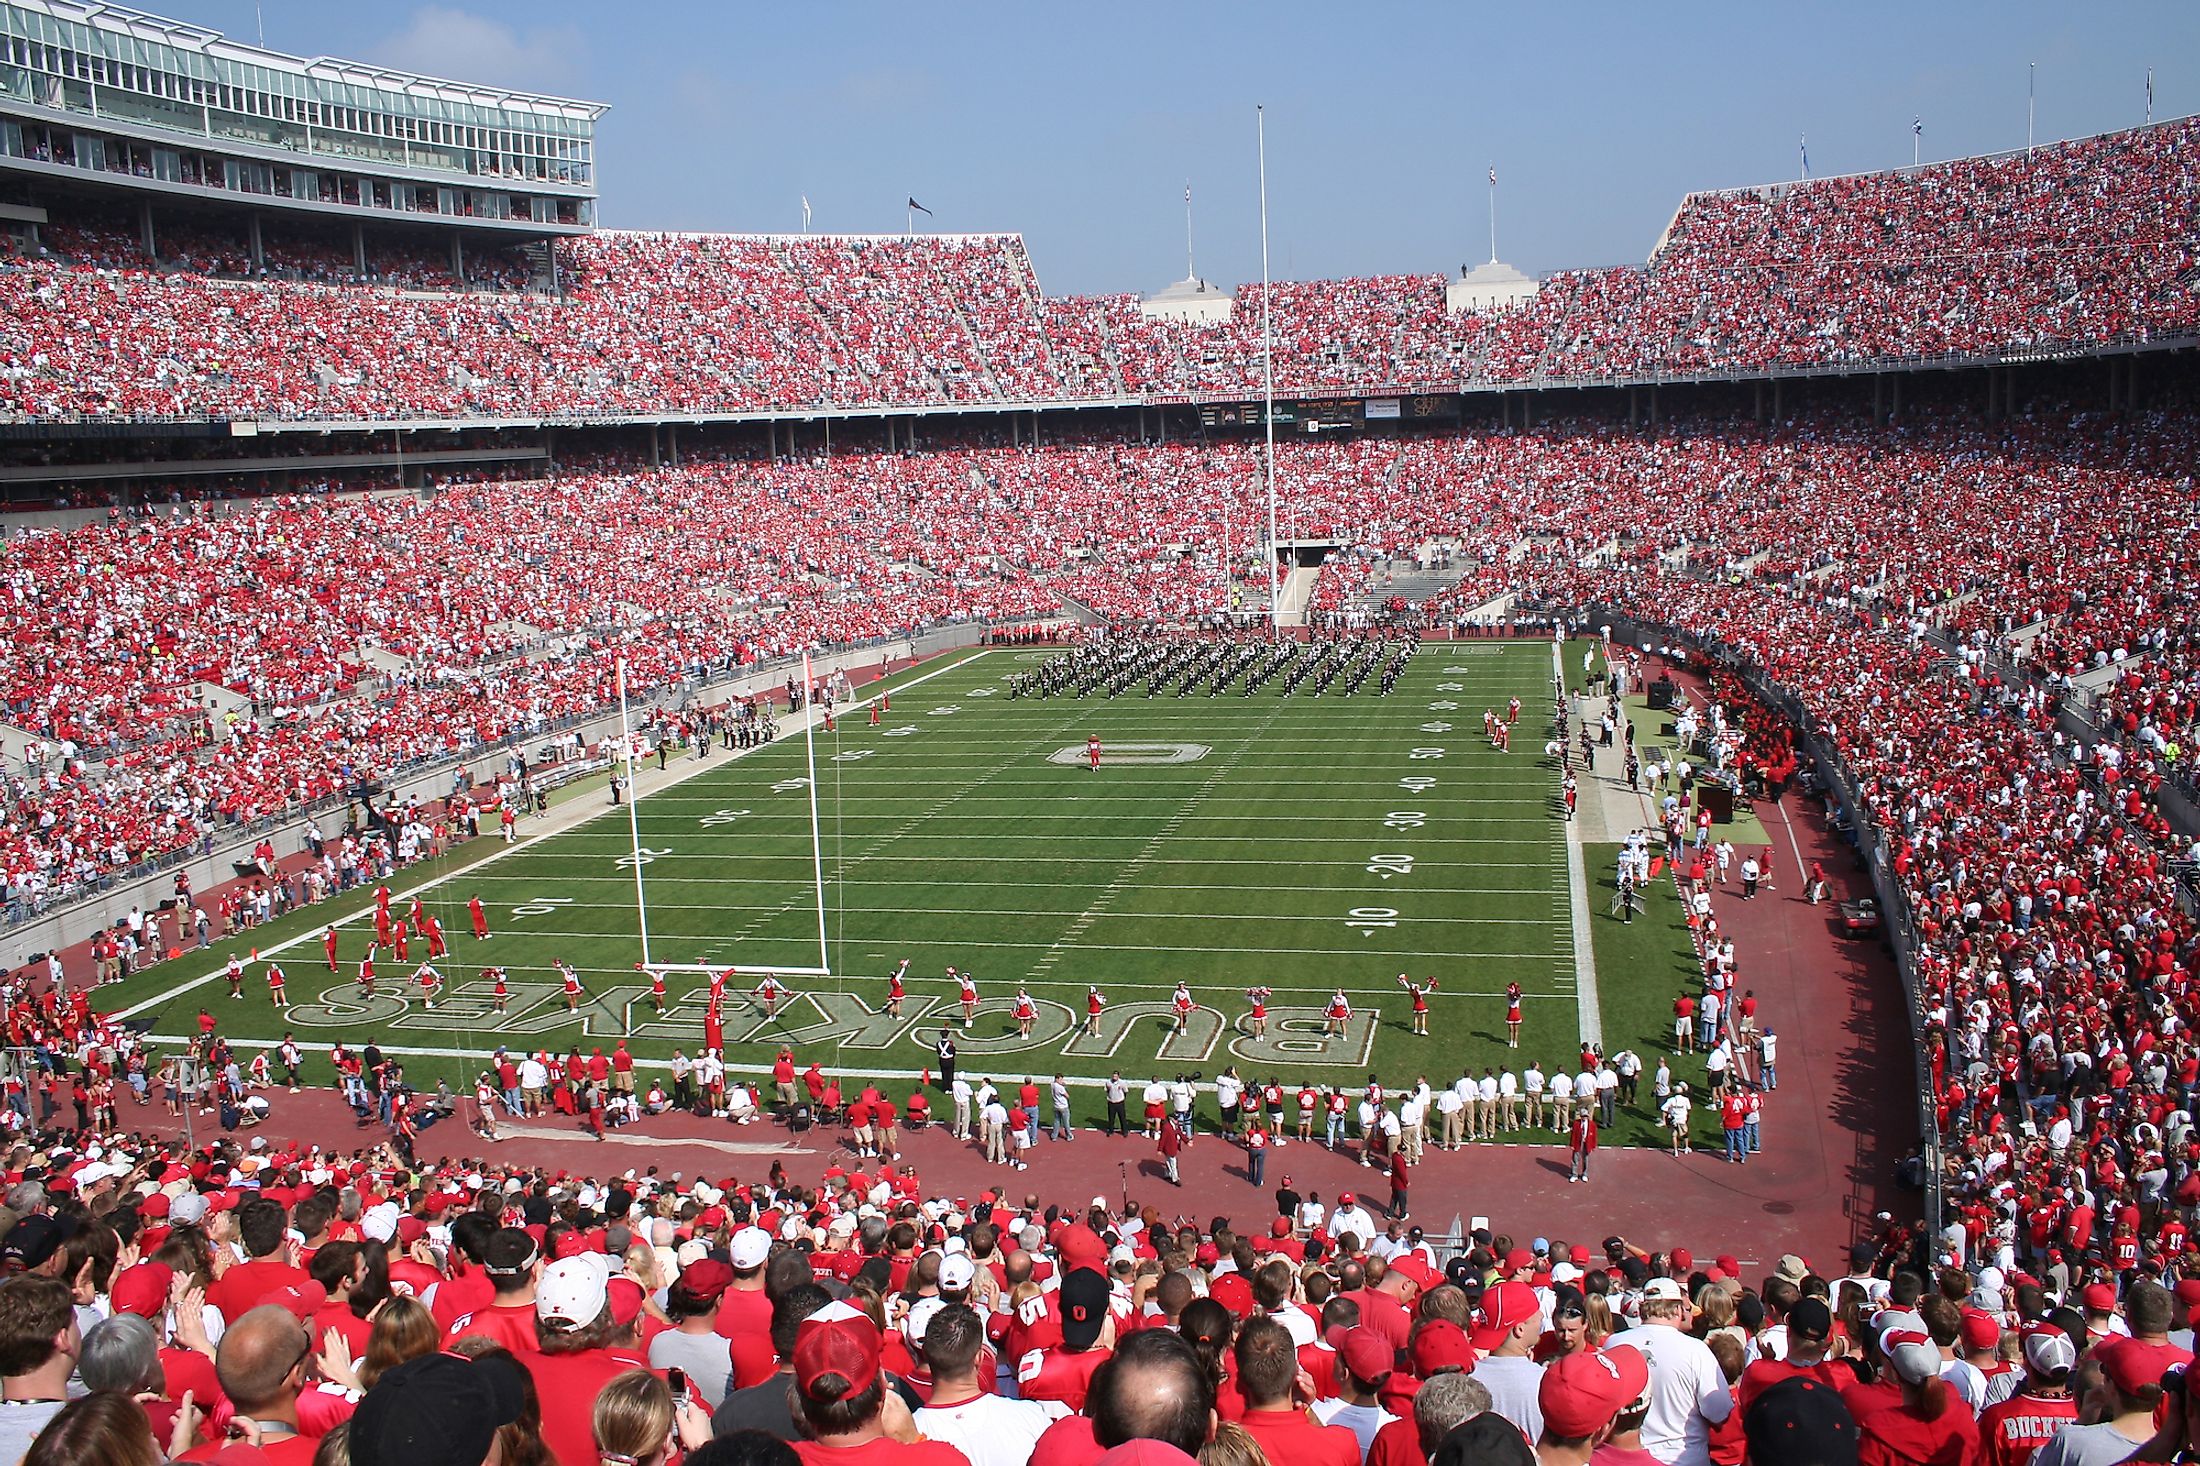 The Ohio Stadium is the world's fifth largest stadium. Editorial credit: aceshot1 / Shutterstock.com